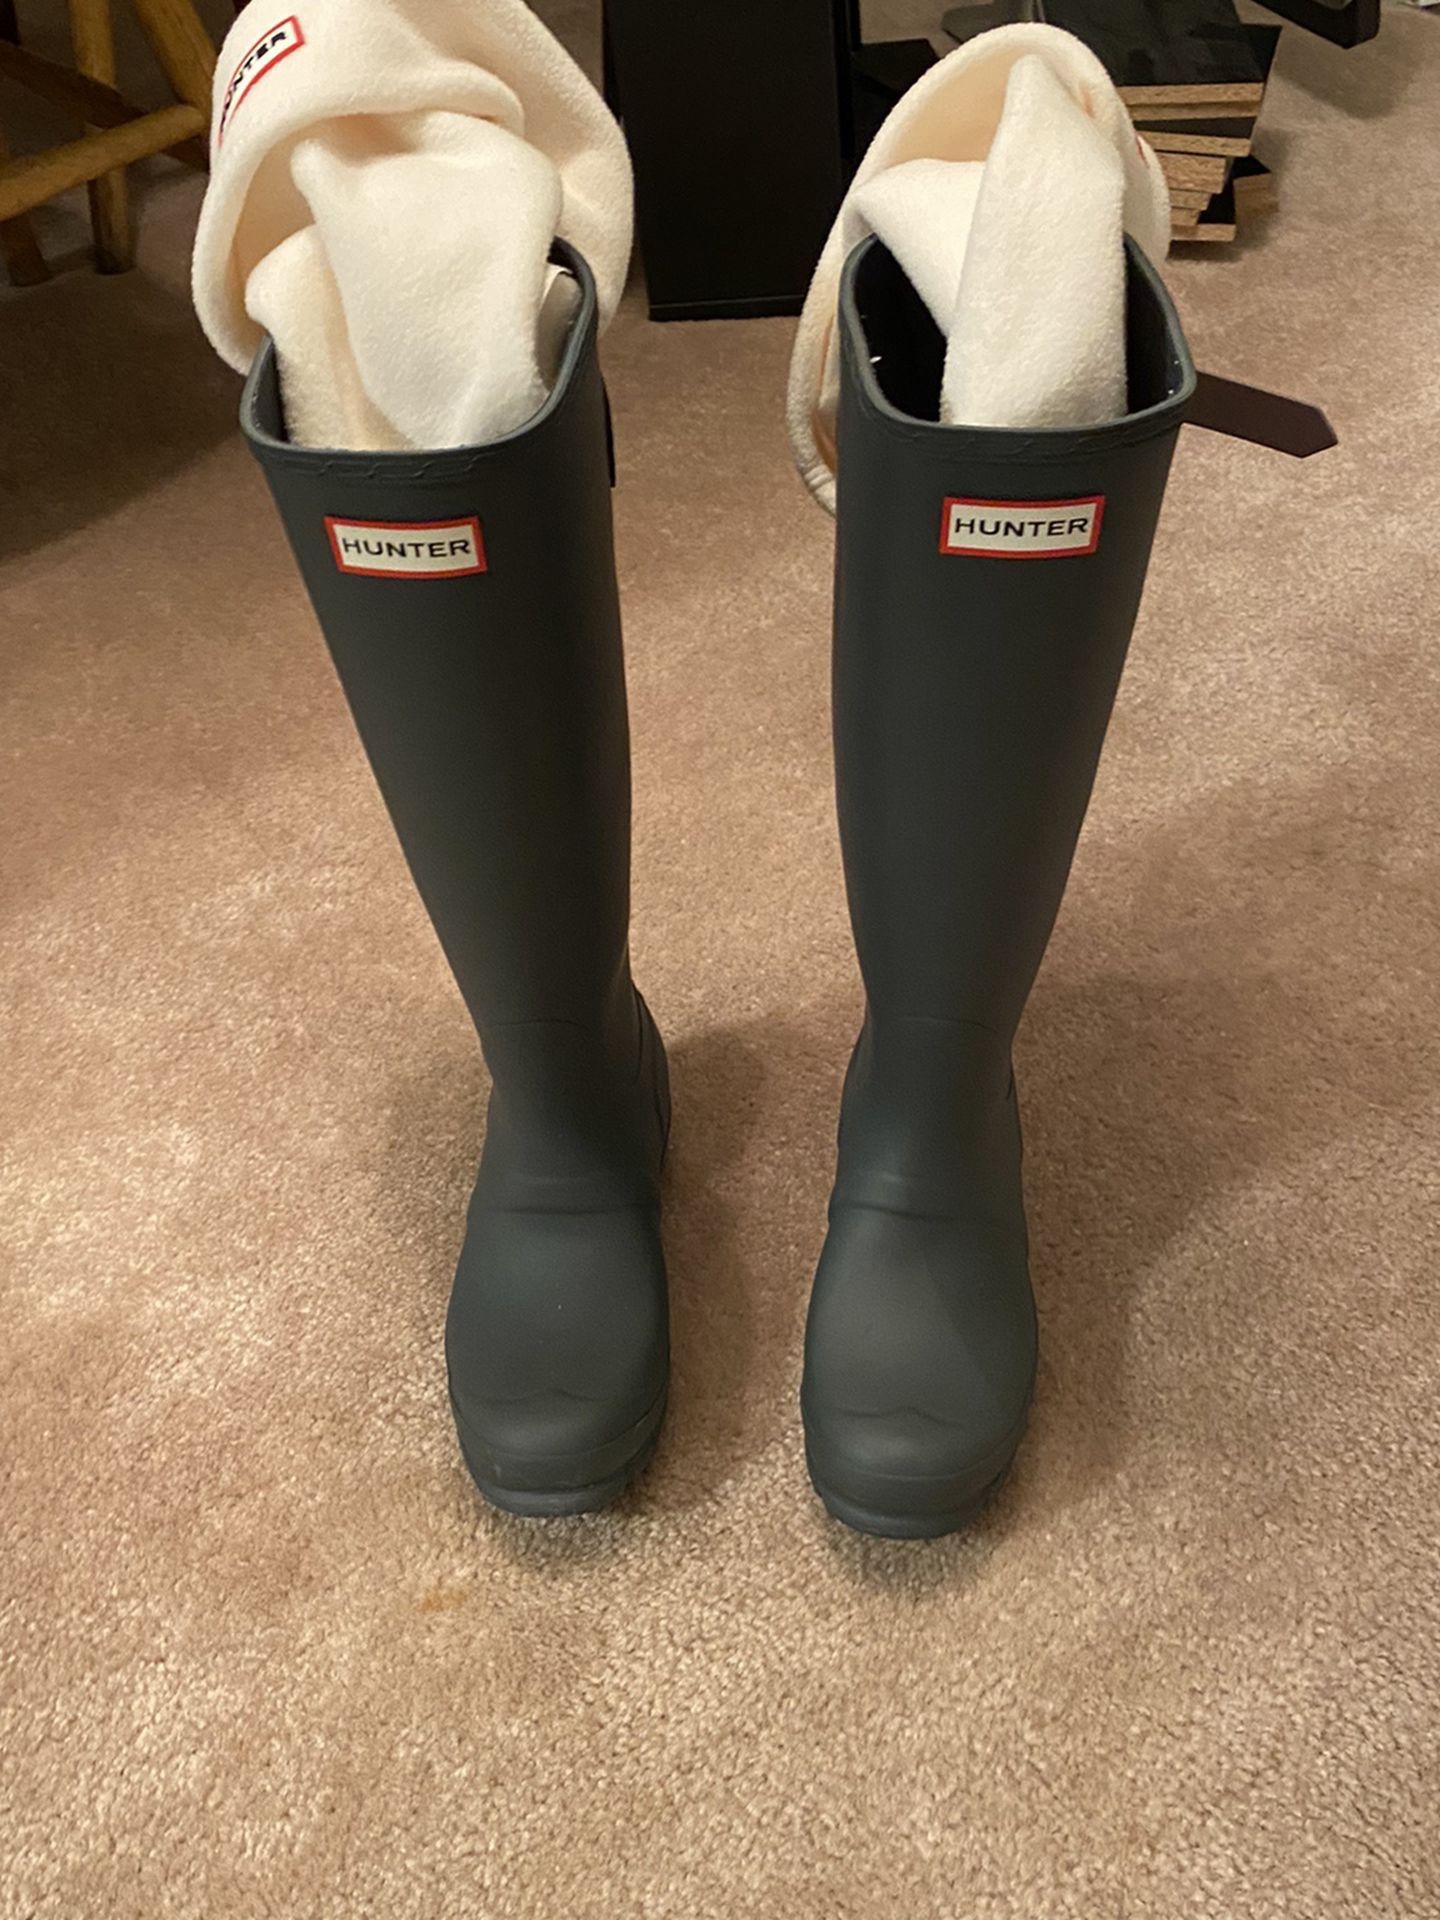 New Hunter Rain Boots Size 5